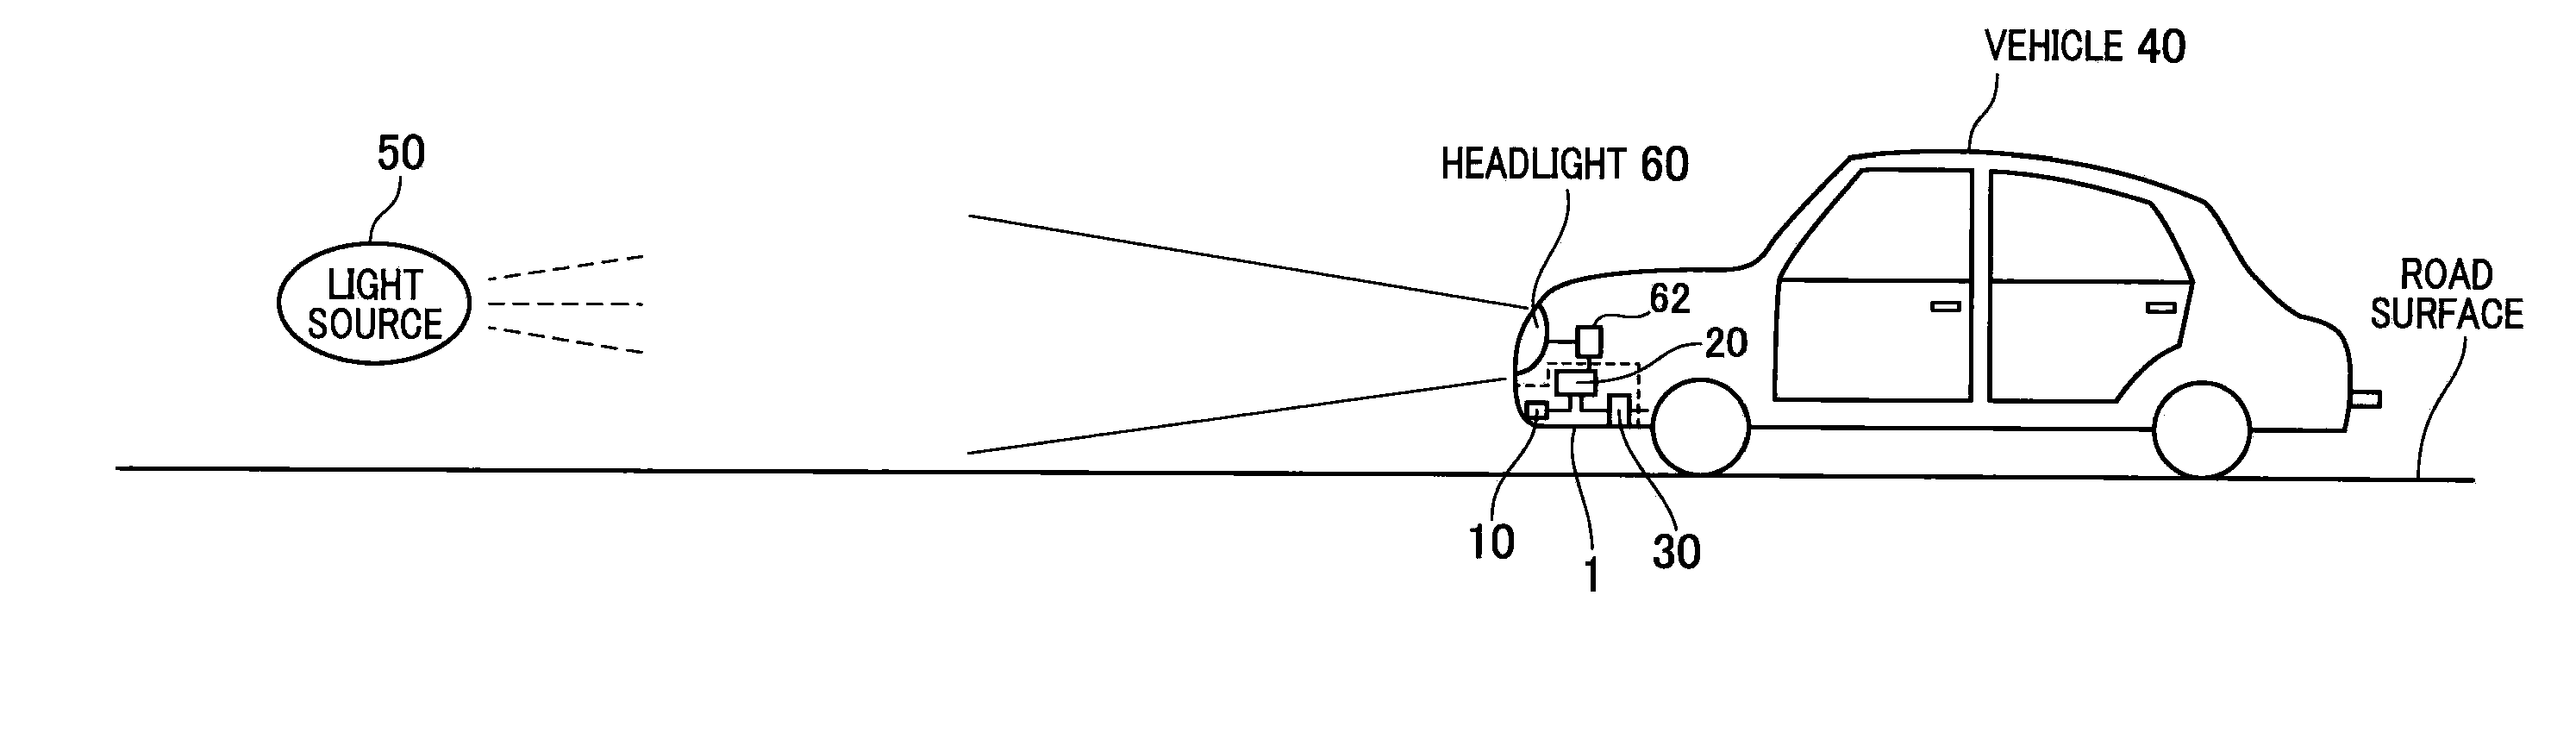 Headlight light distribution control device and method